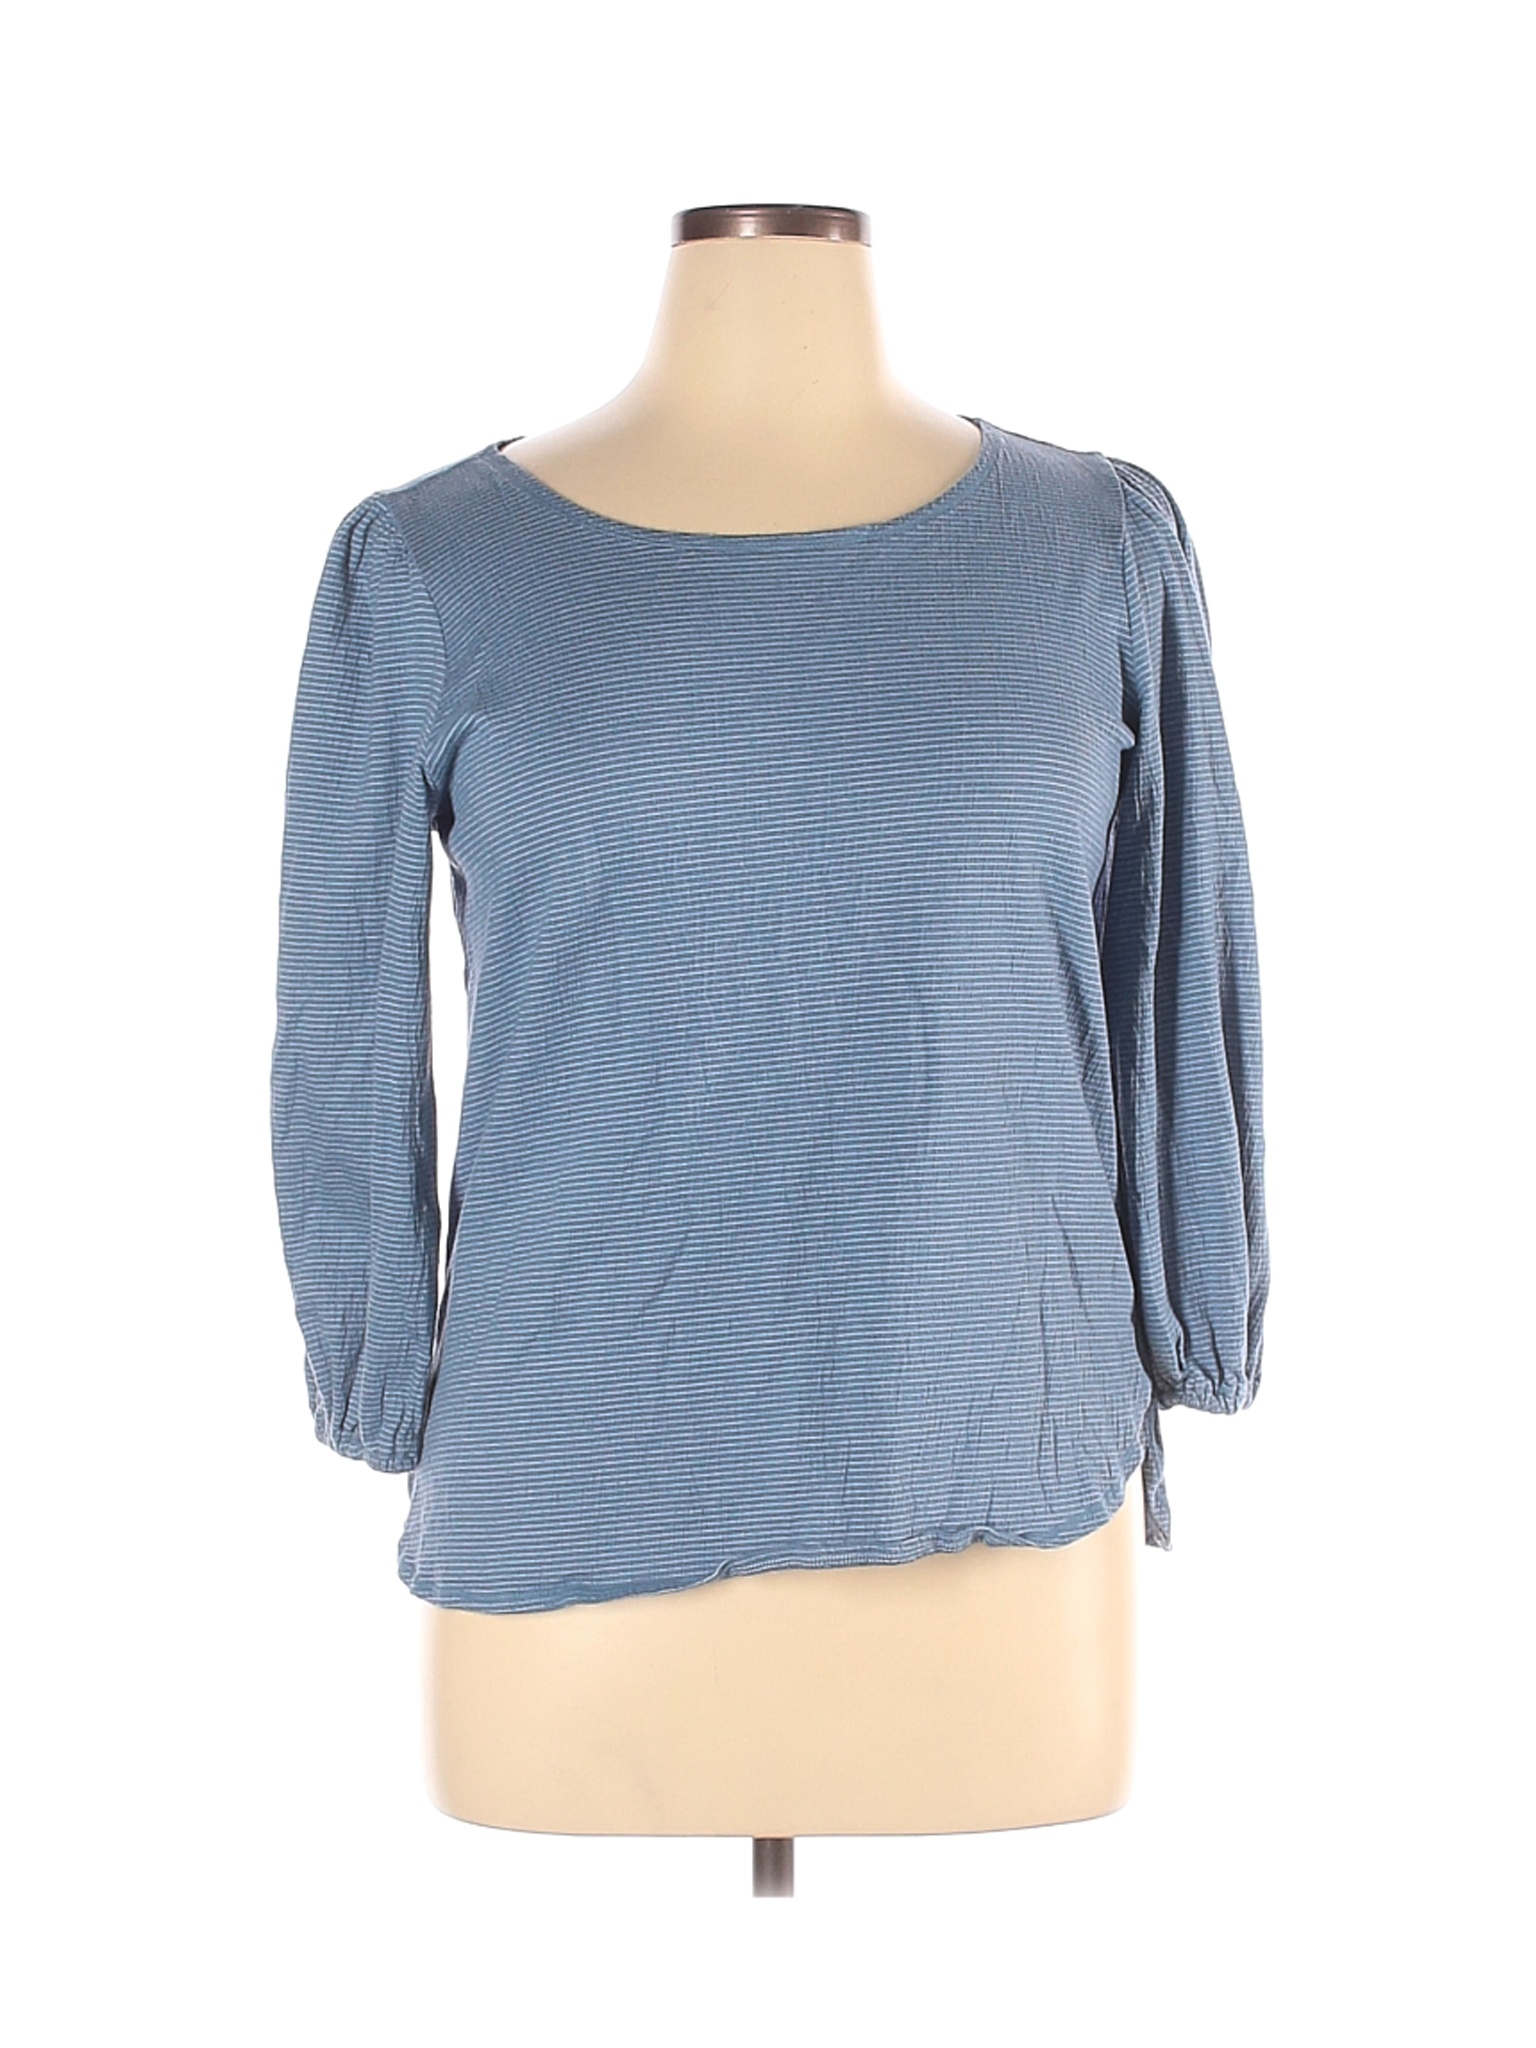 Max Studio Women Blue 3/4 Sleeve Top XL | eBay